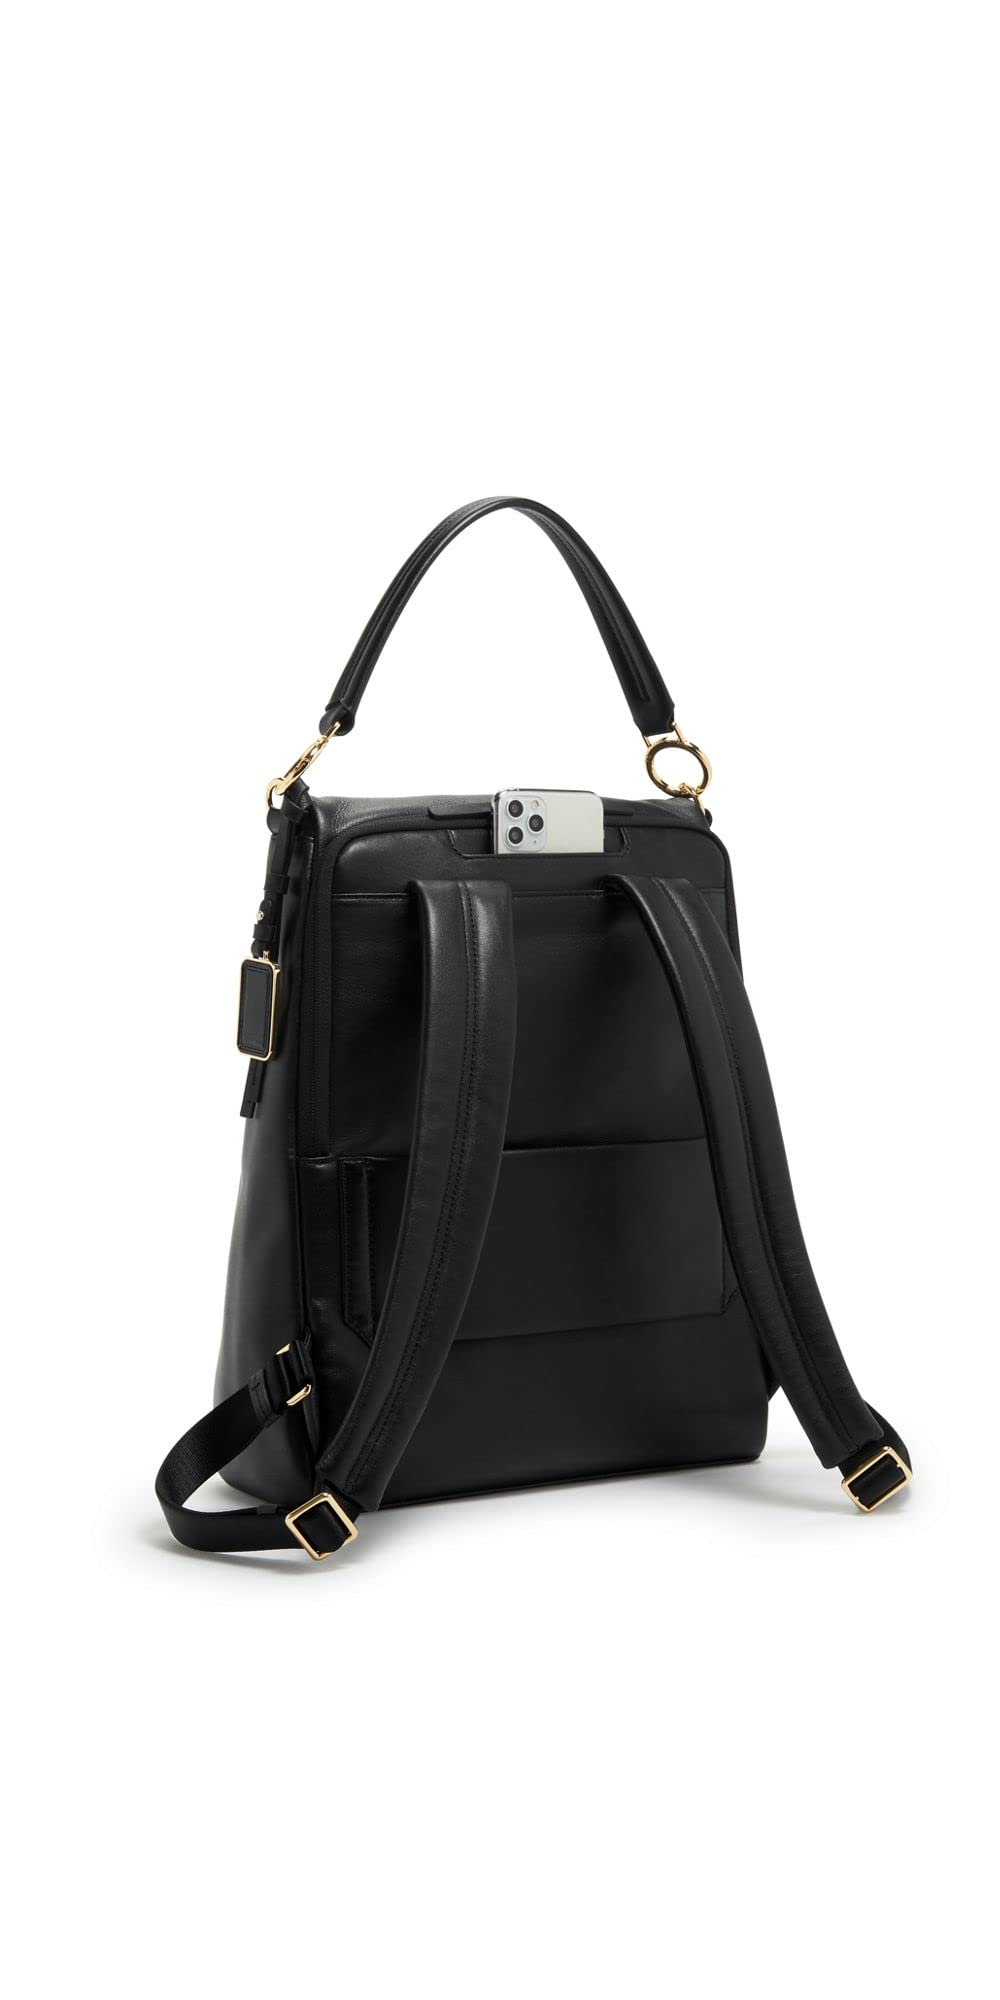 TUMI Voyageur Liv Backpack/Tote - Backpack or Tote Bag - Tote Bag & Backpack Combo - Black Leather & Gold Hardware